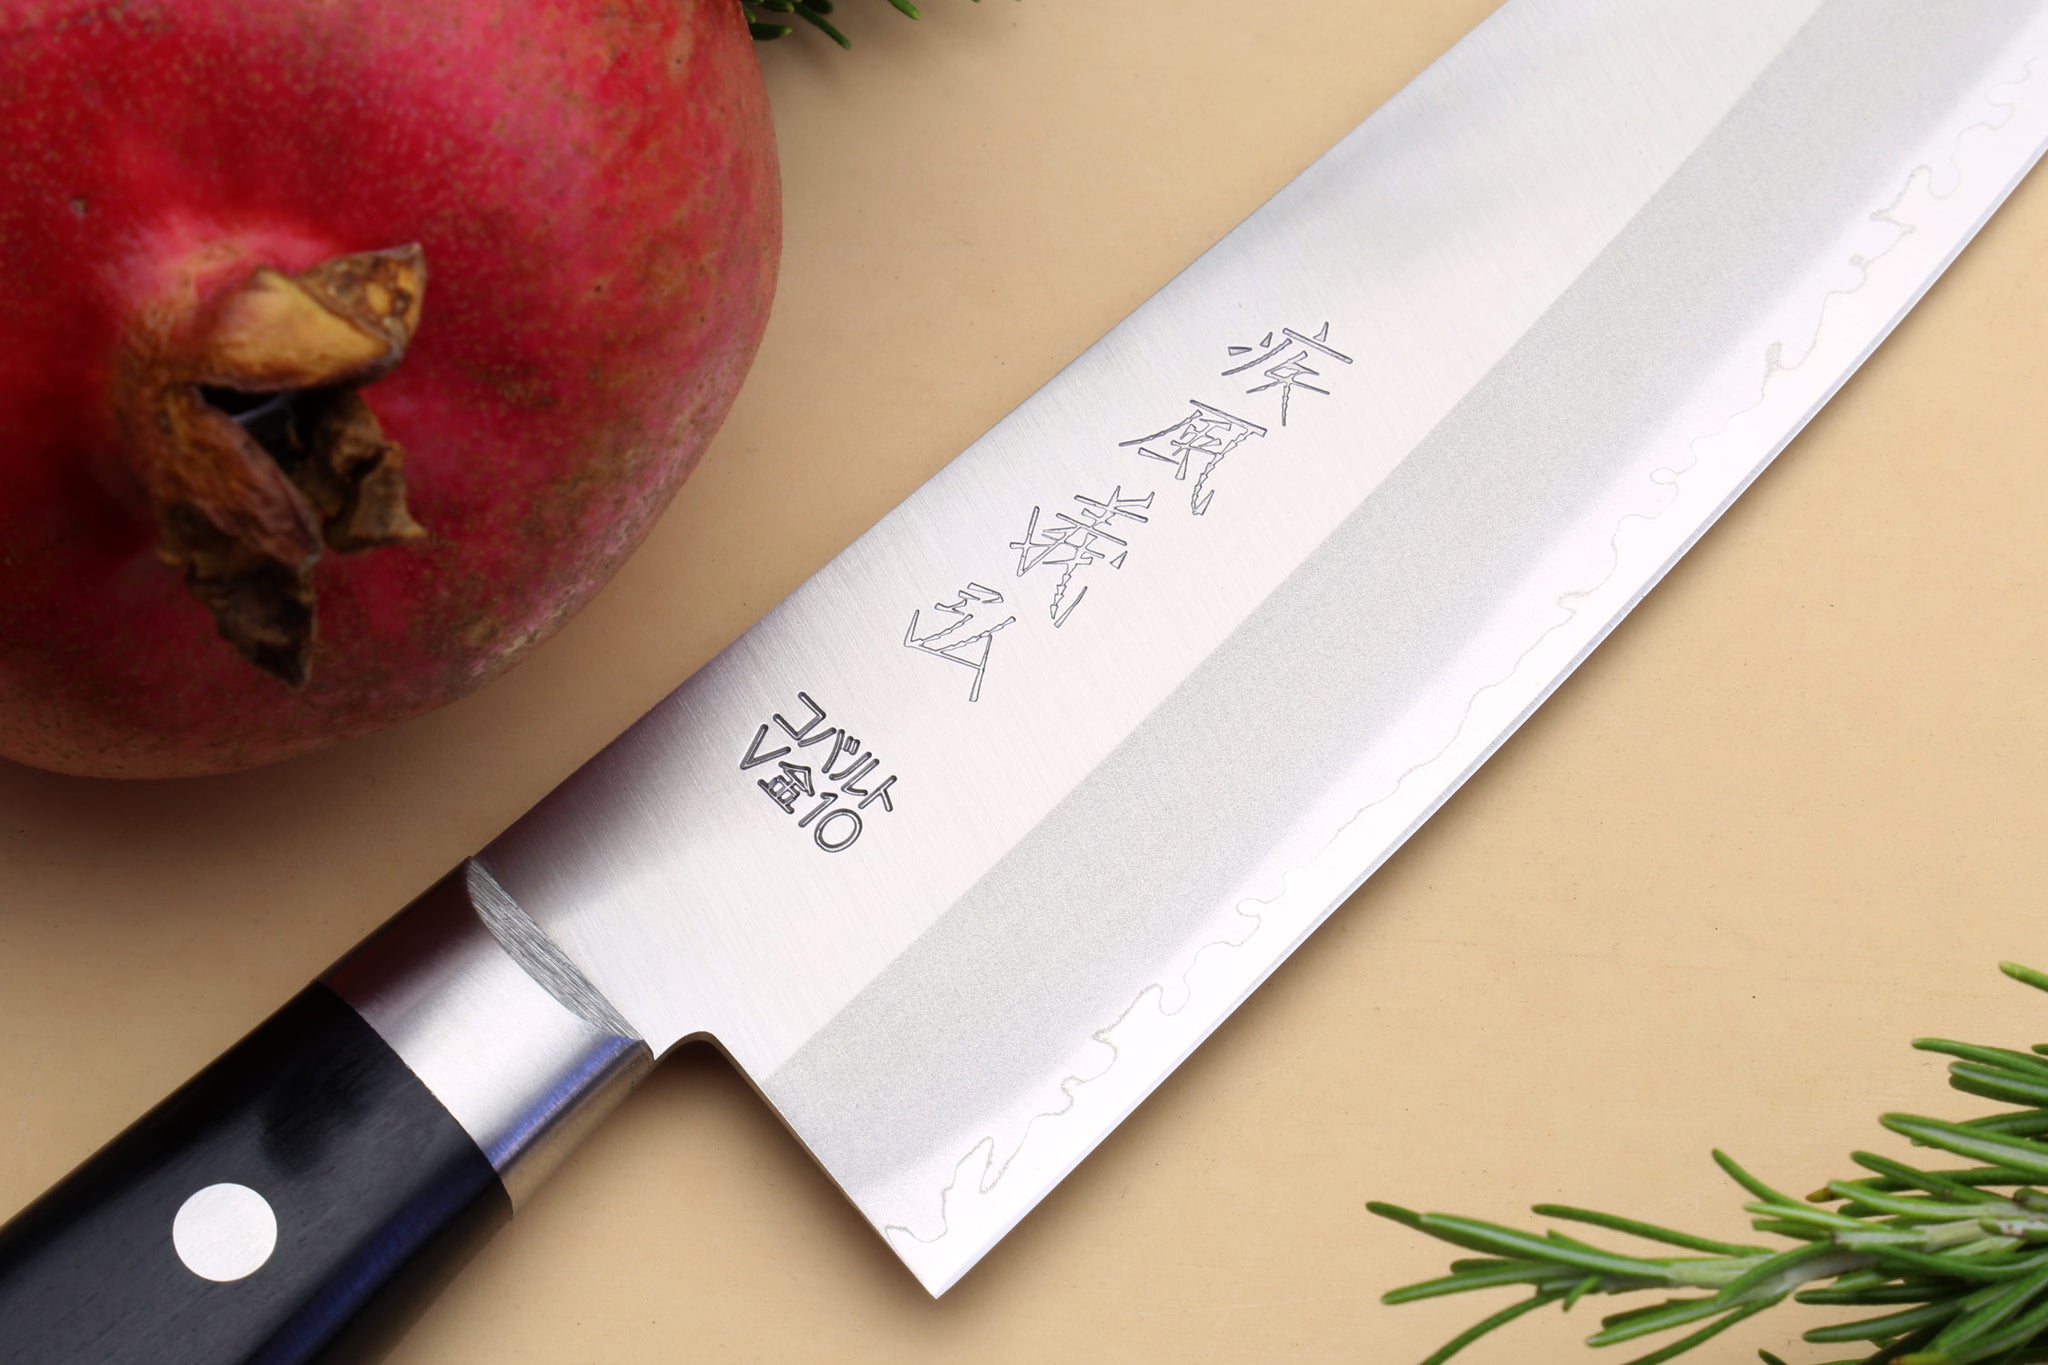 Yoshihiro VG-10 Gold Stainless Steel Gyuto Japanese Chefs Knife